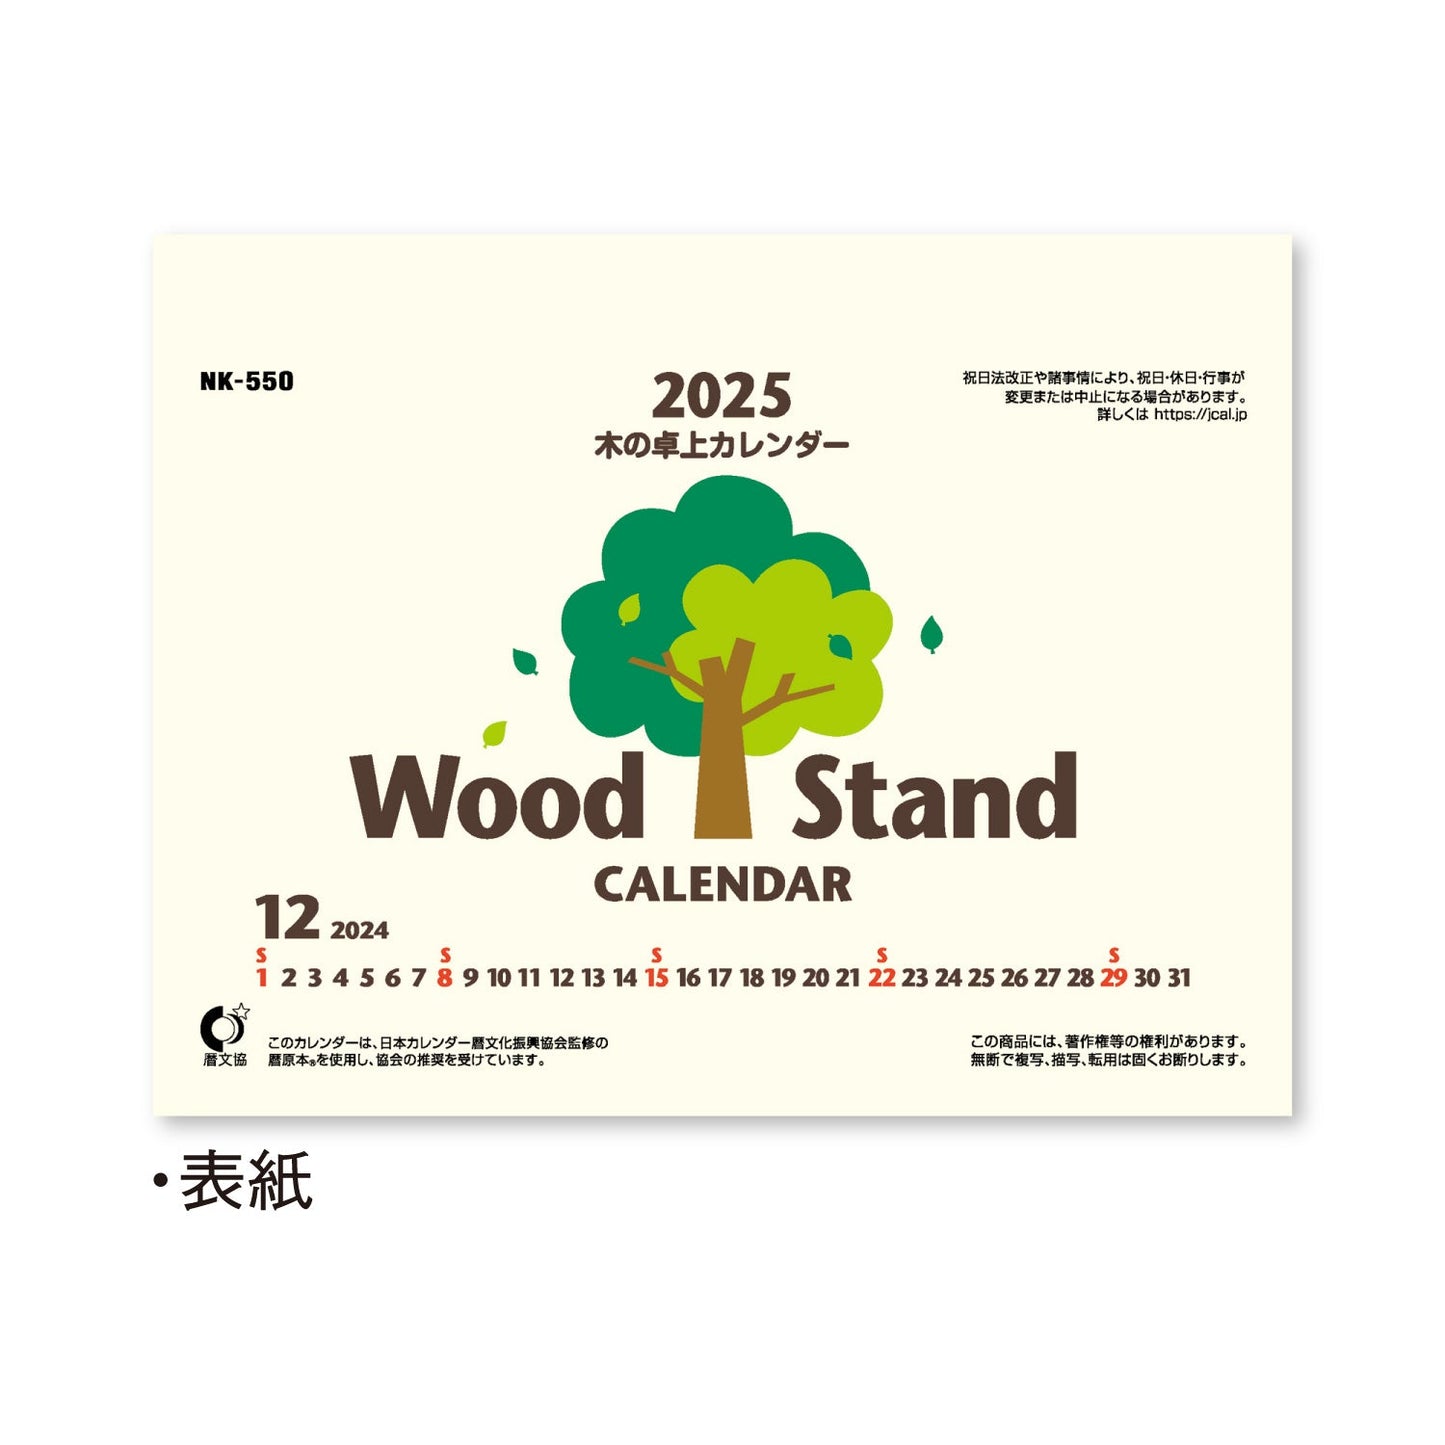 NK-550 木の卓上カレンダー